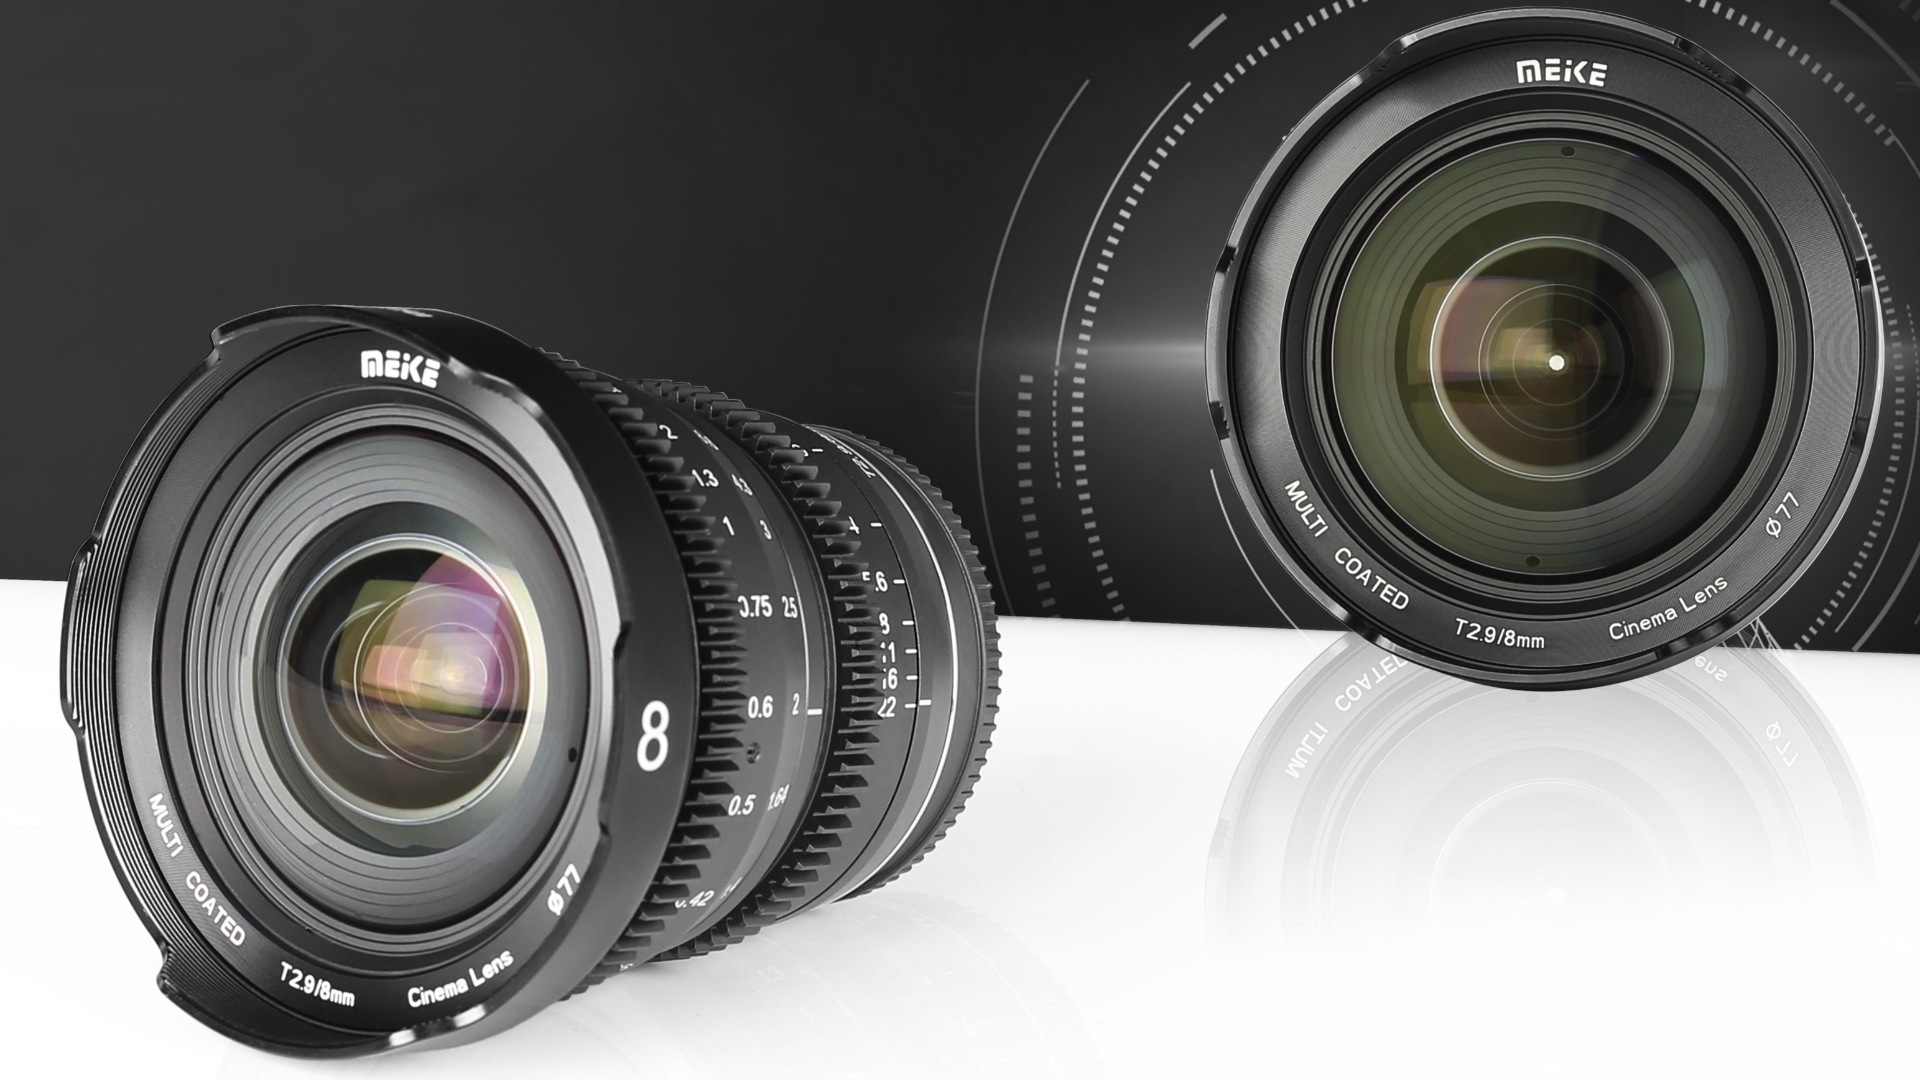 MEIKEが8mm T2.9 Cine Mini Primeレンズを発表 | CineD